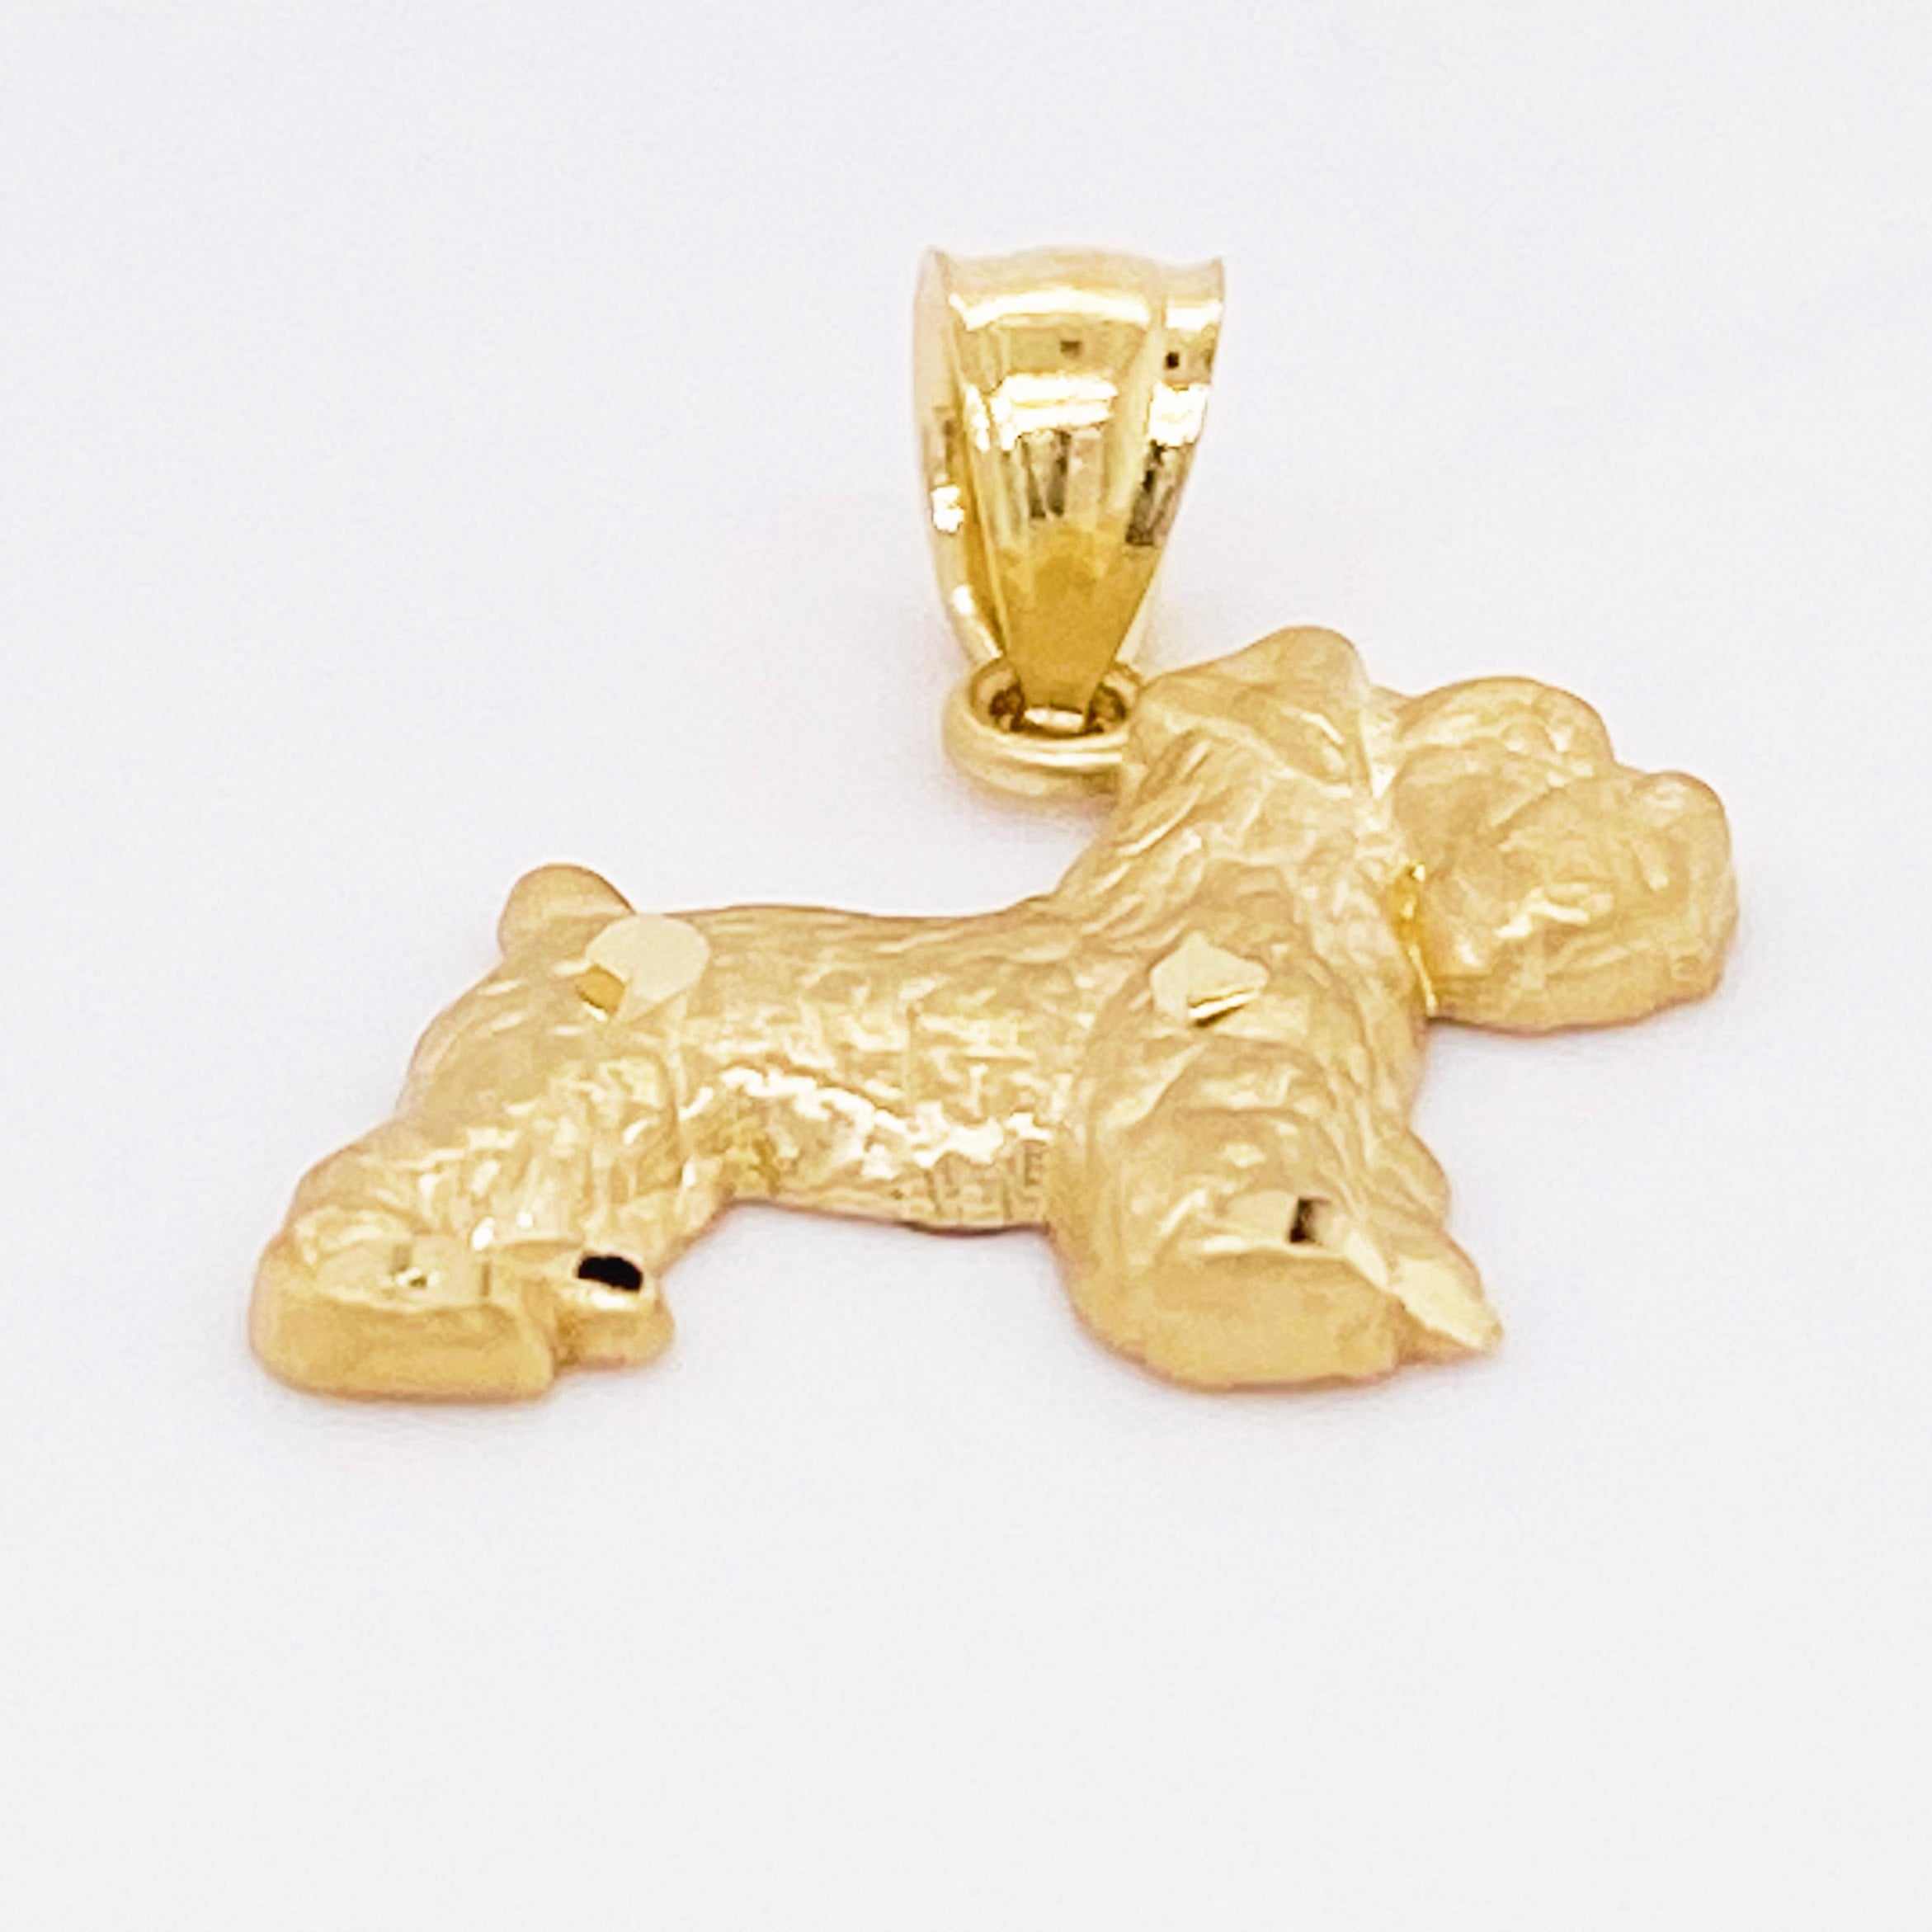 Schnauzer Dog Pendant in 14K Gold